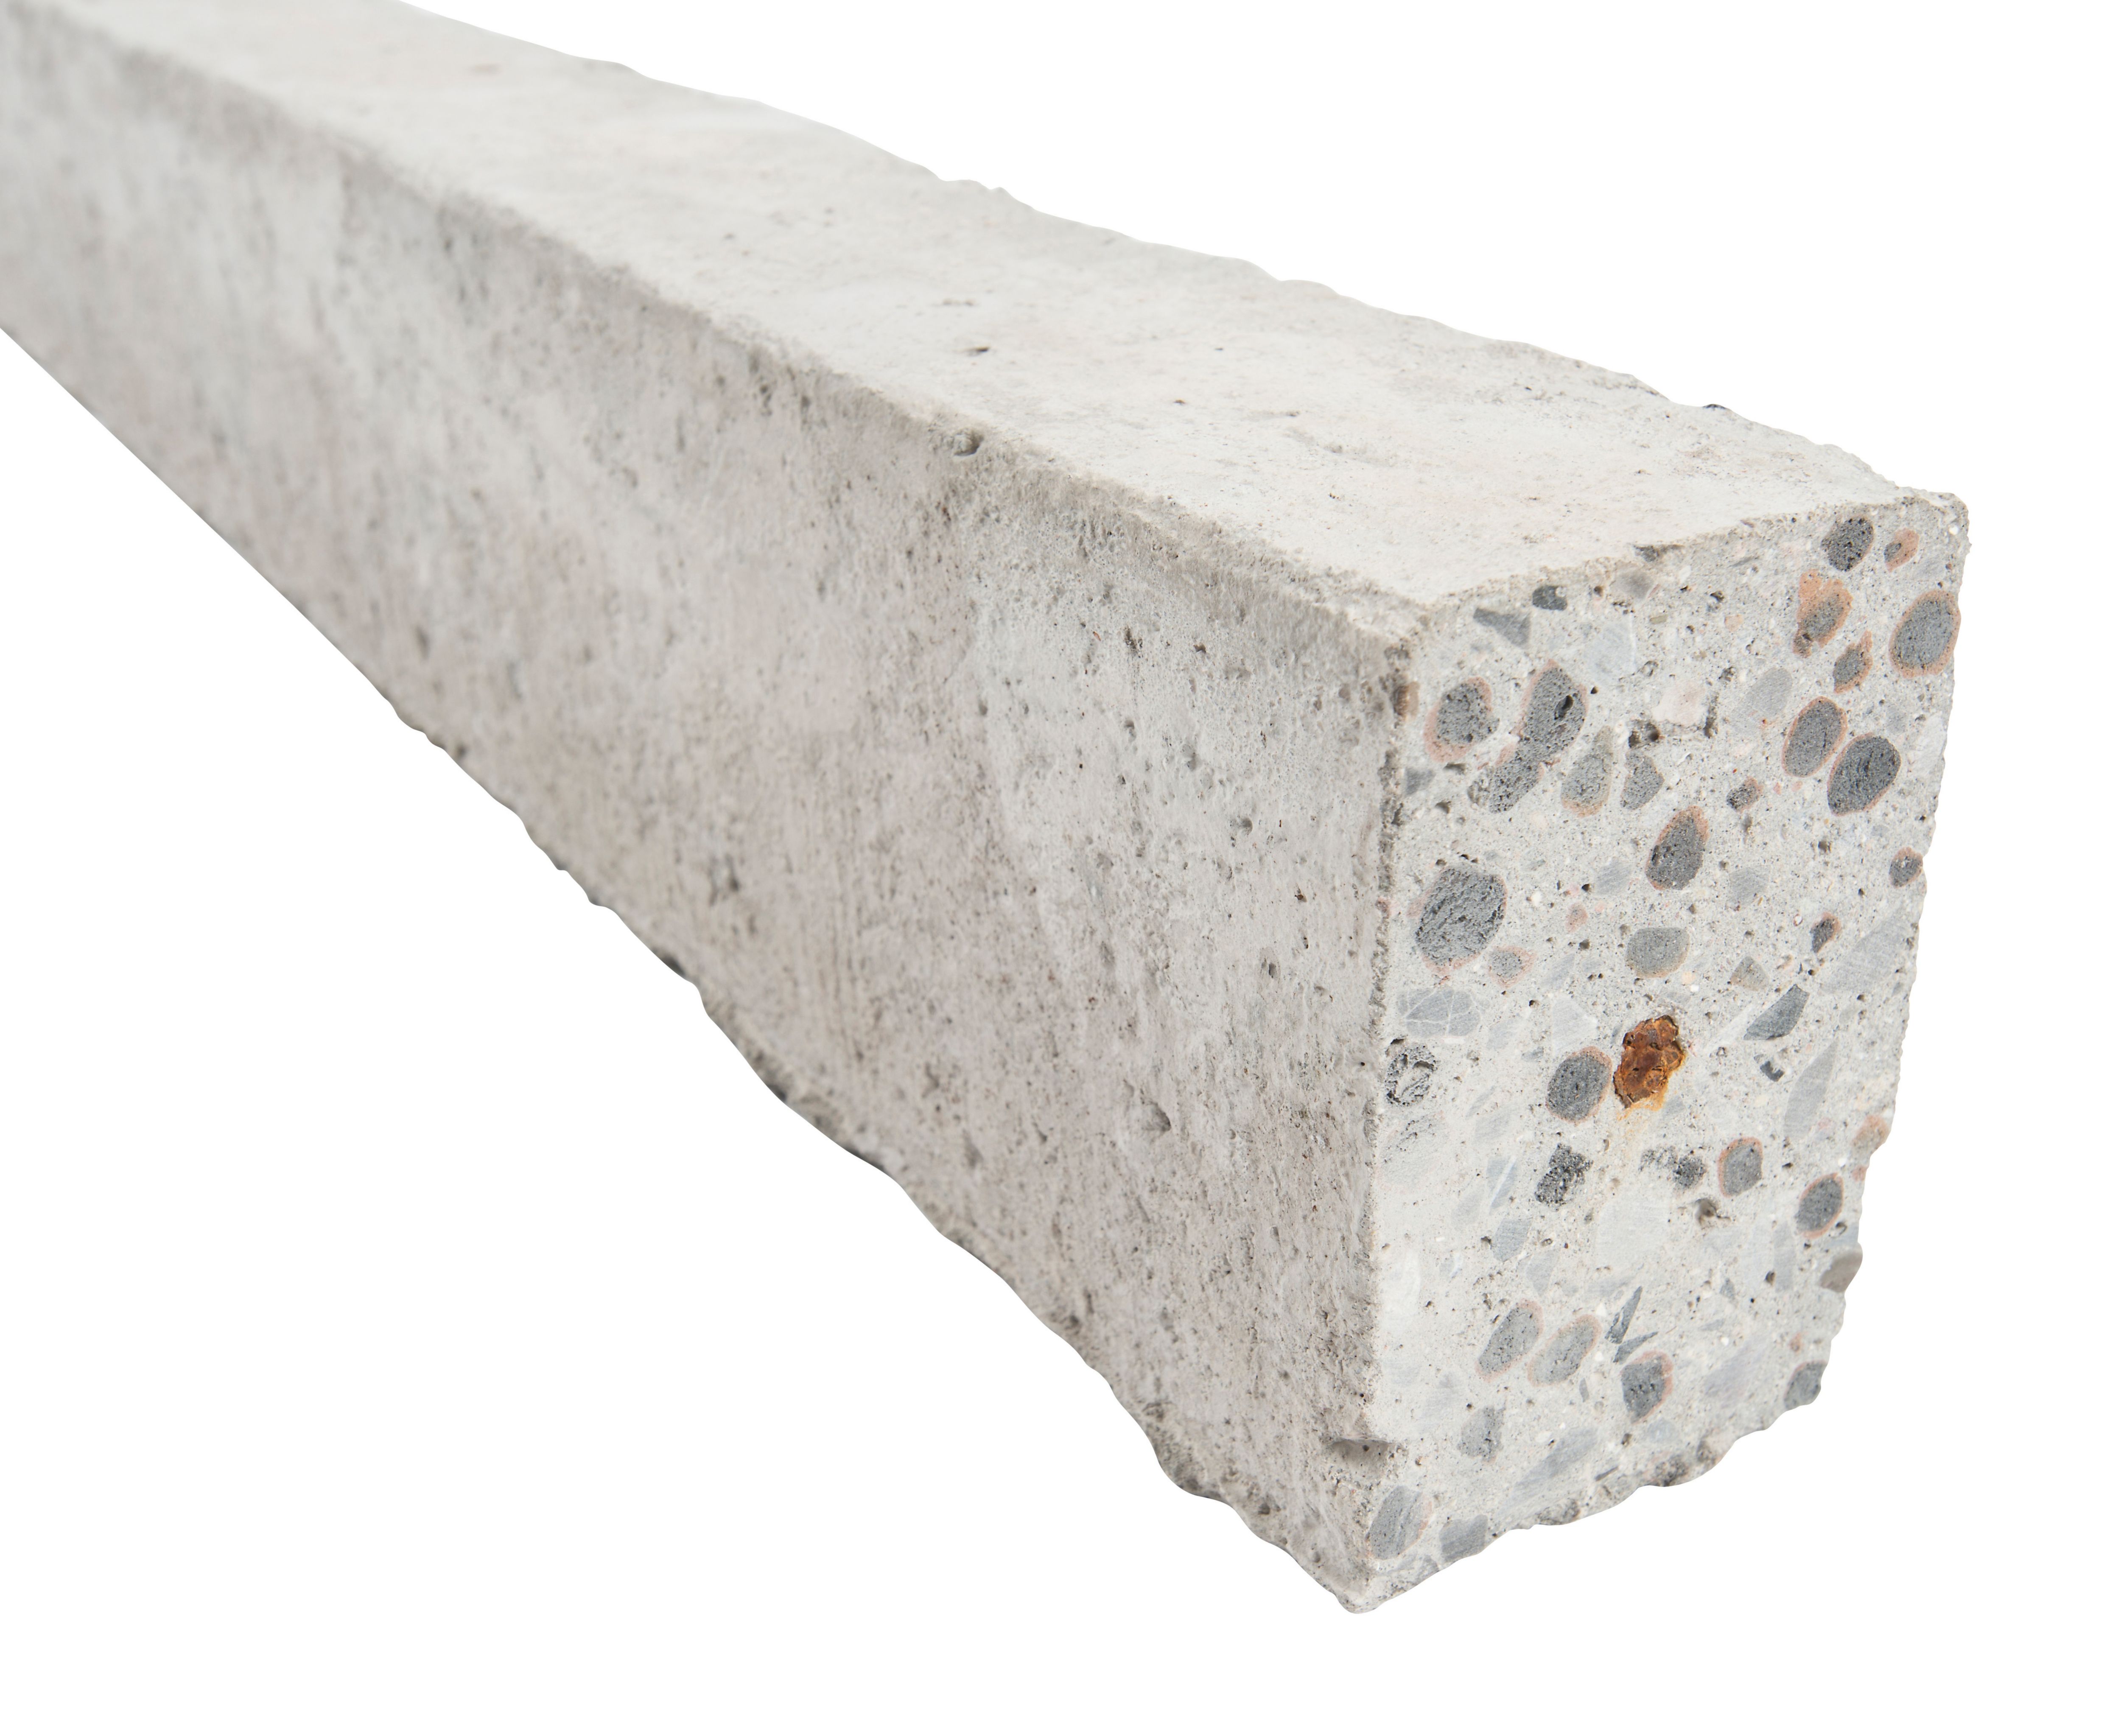 Supreme L04 Steel Reinforced Concrete Lintel - 100 x 65 x 1500mm